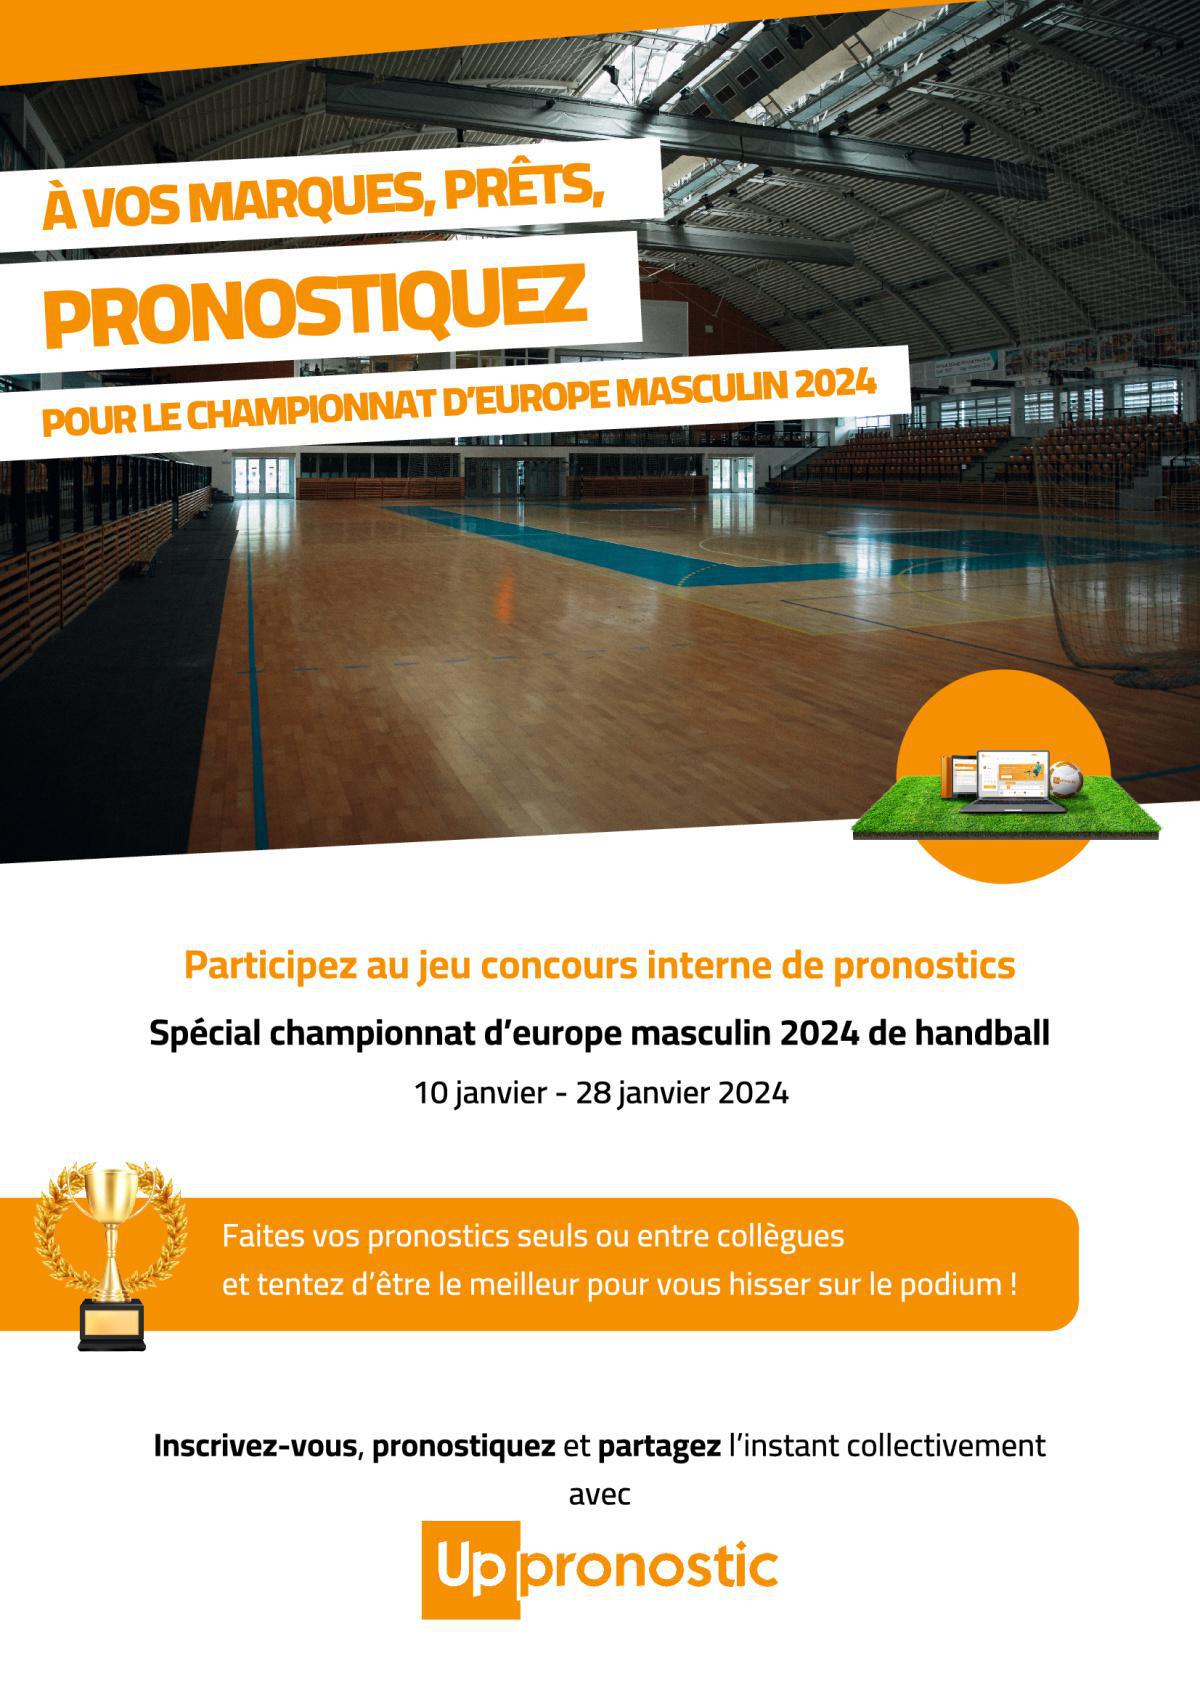 Pronostiquez pour l'euro masculin de handball 2024